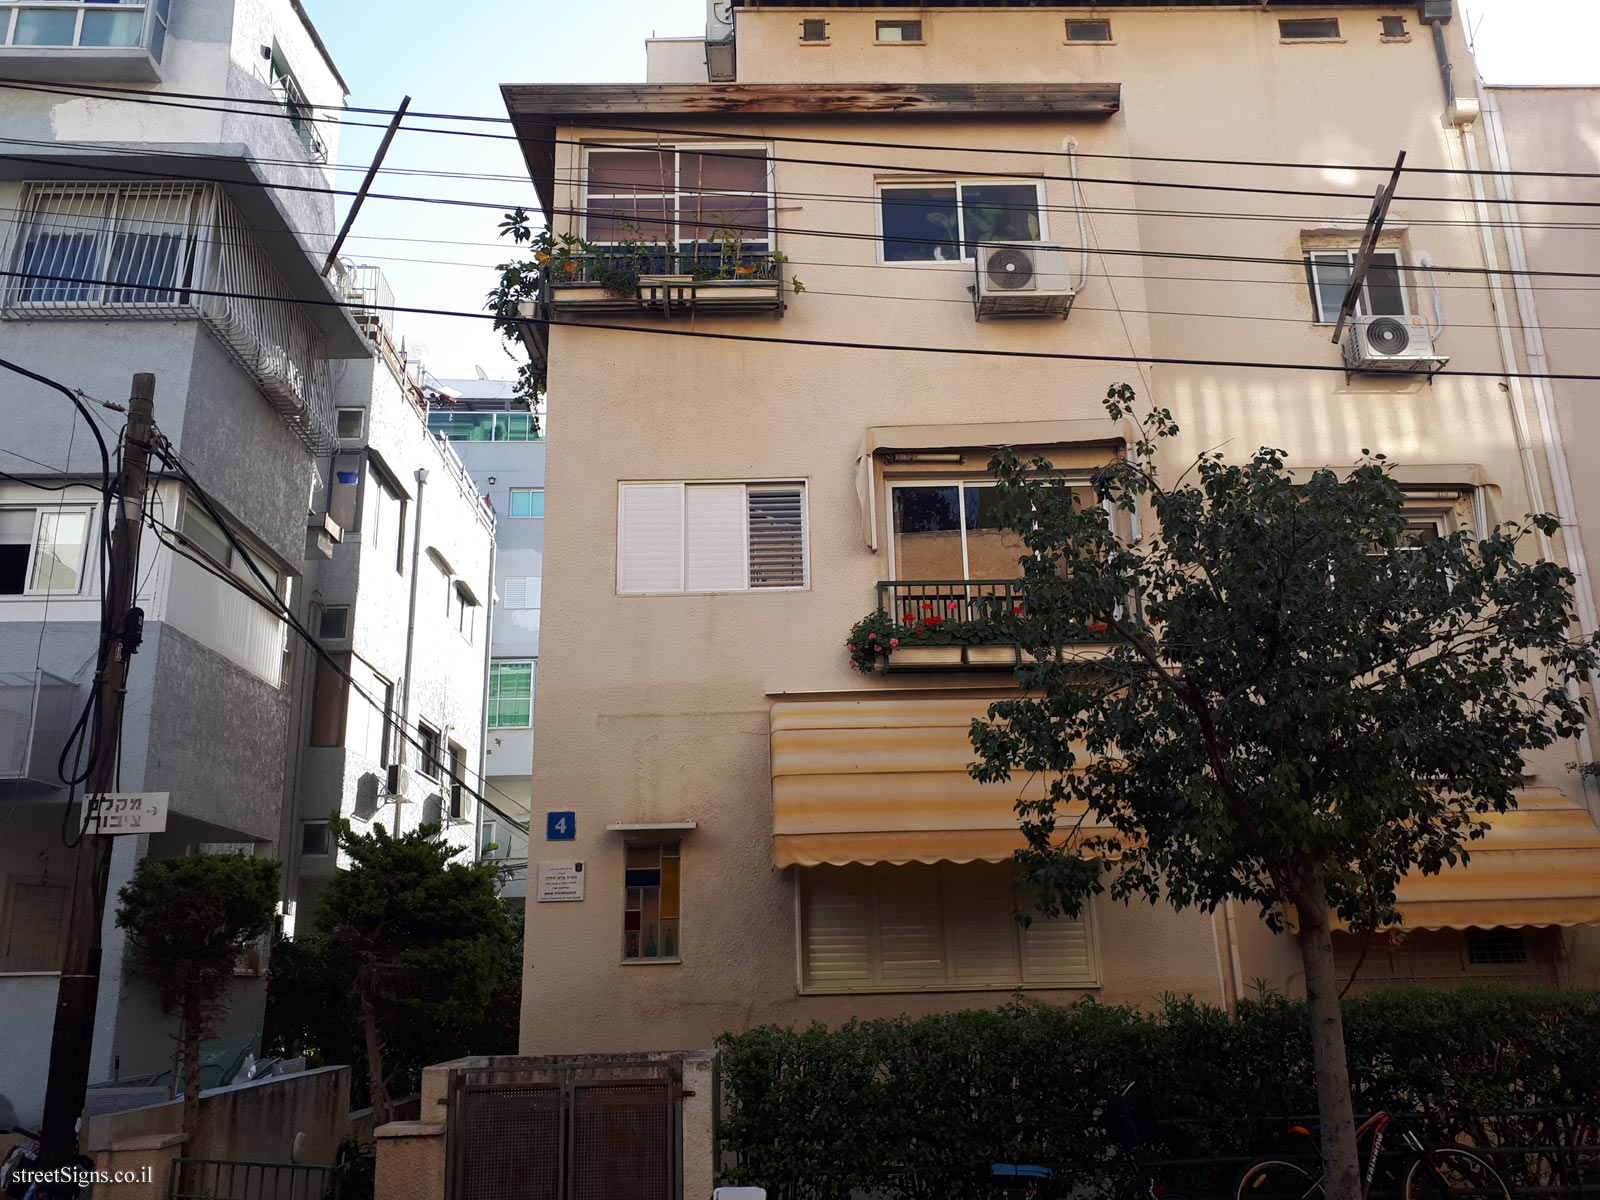 The house of Meir Pichhadze - Emile Zola St 4, Tel Aviv-Yafo, Israel